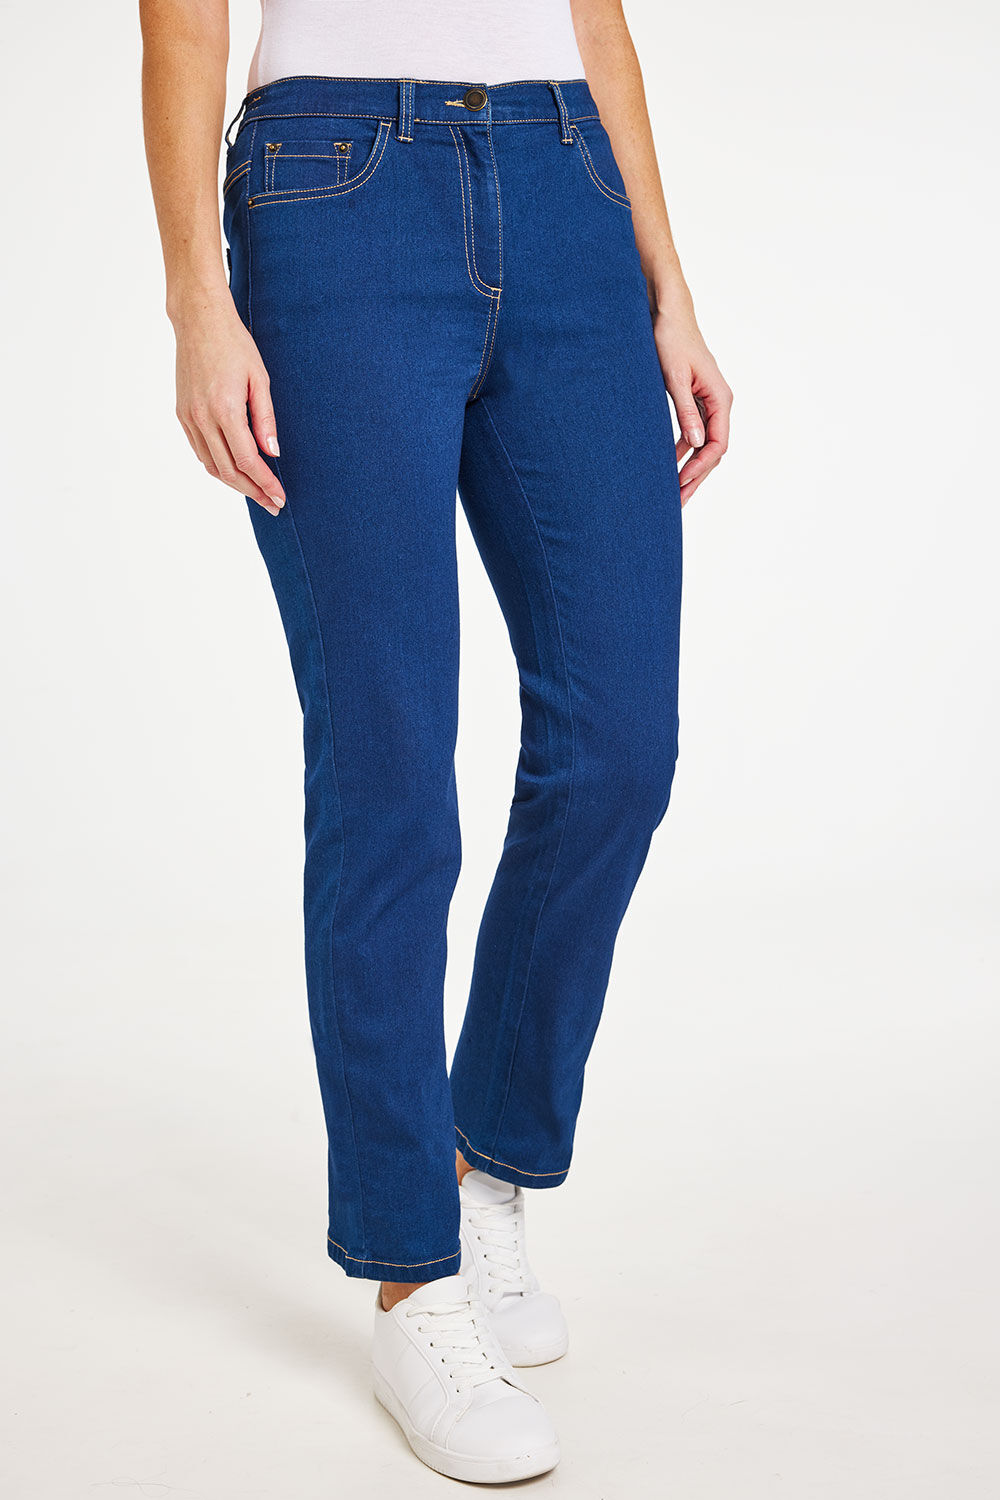 Bonmarche Women’s Navy Blue Cotton The SARA Straight Leg Jeans, Size: 20